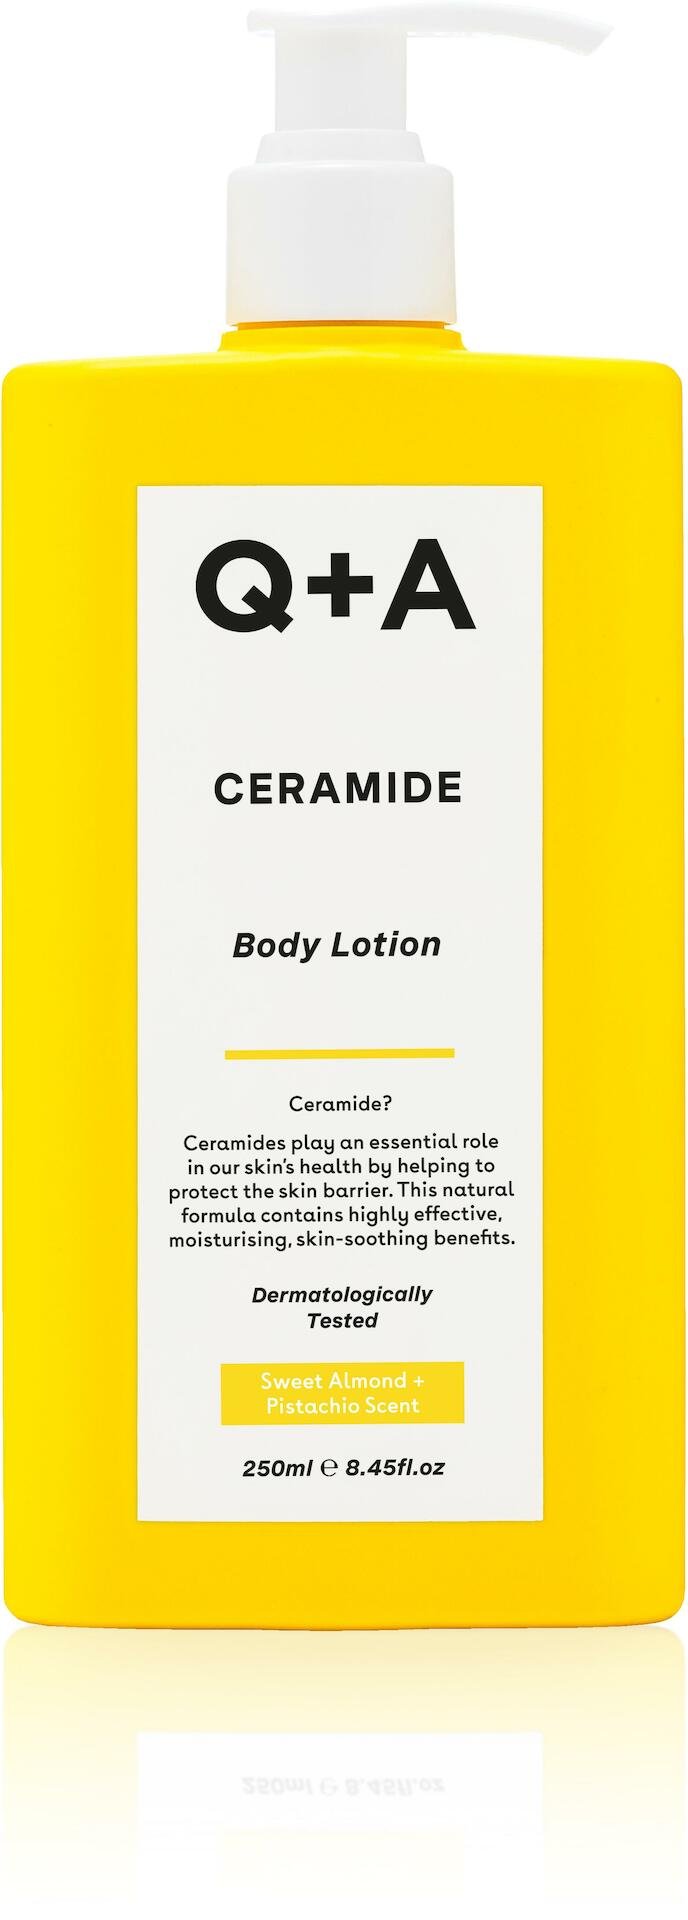 Q+A Ceramide Body Lotion 250ml